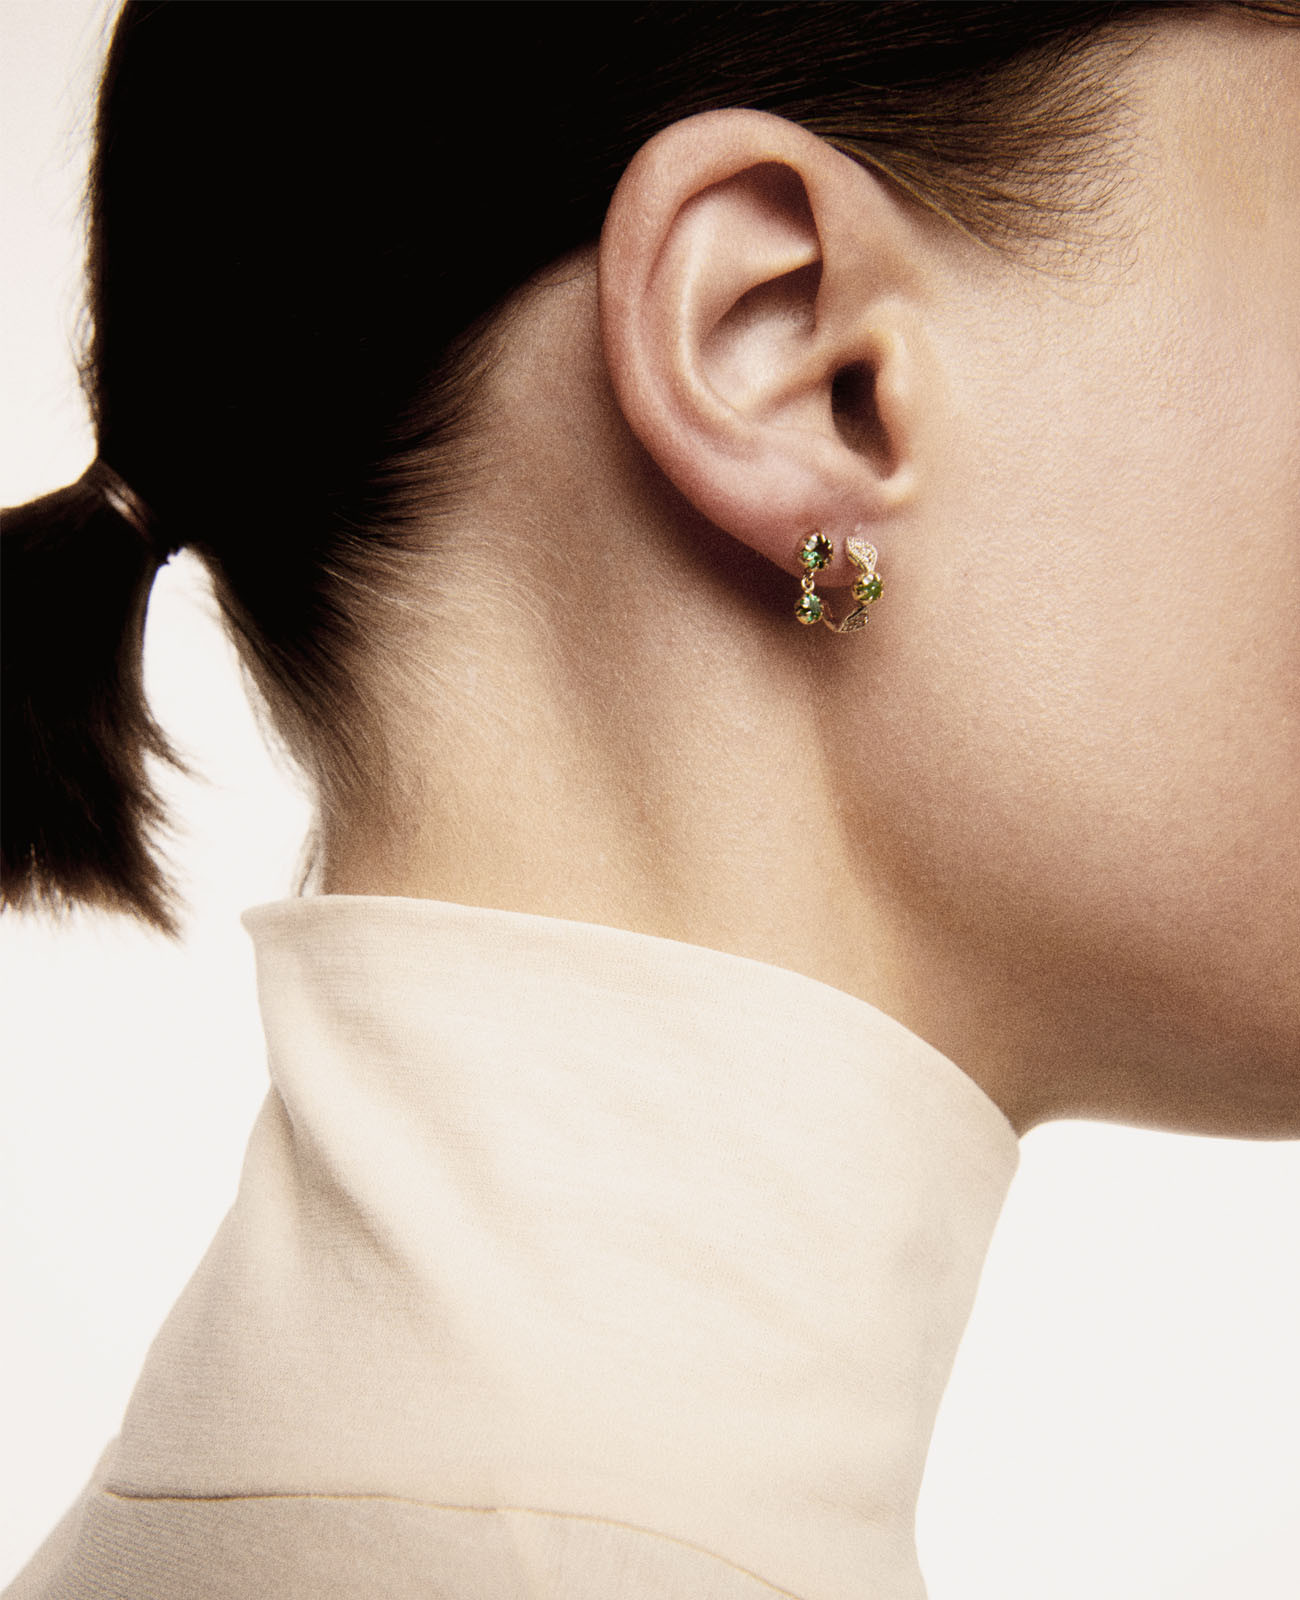 ADELE N°1 EMERALD earring pascale monvoisin jewelry paris